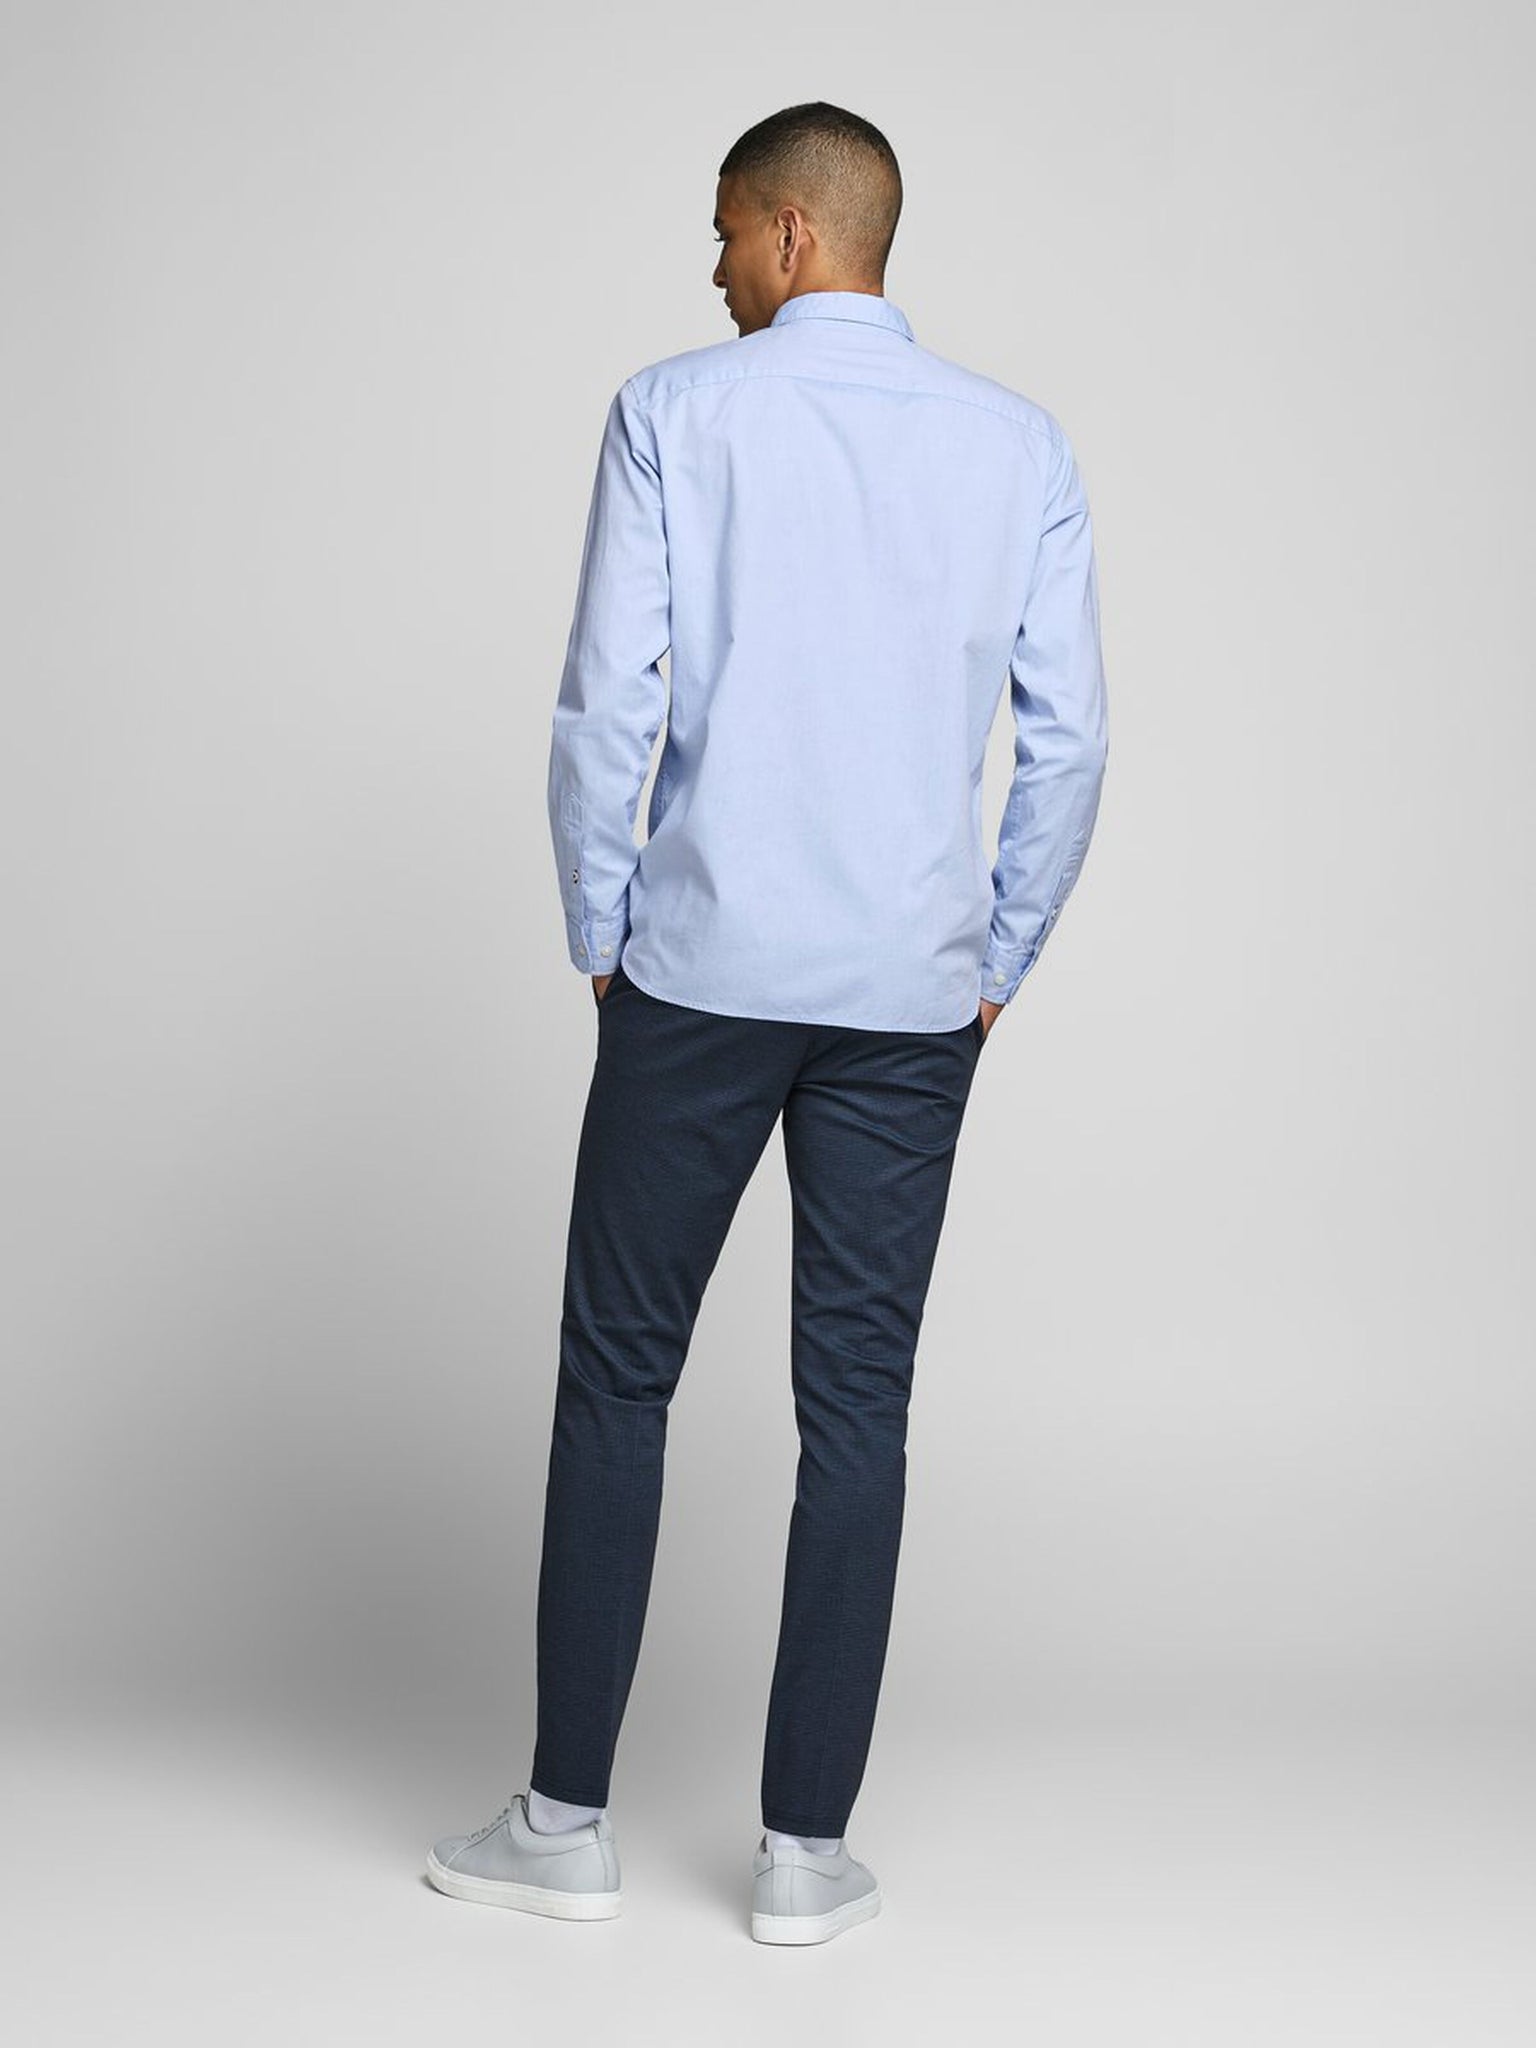 Skjorta Oxford, cashmere blue